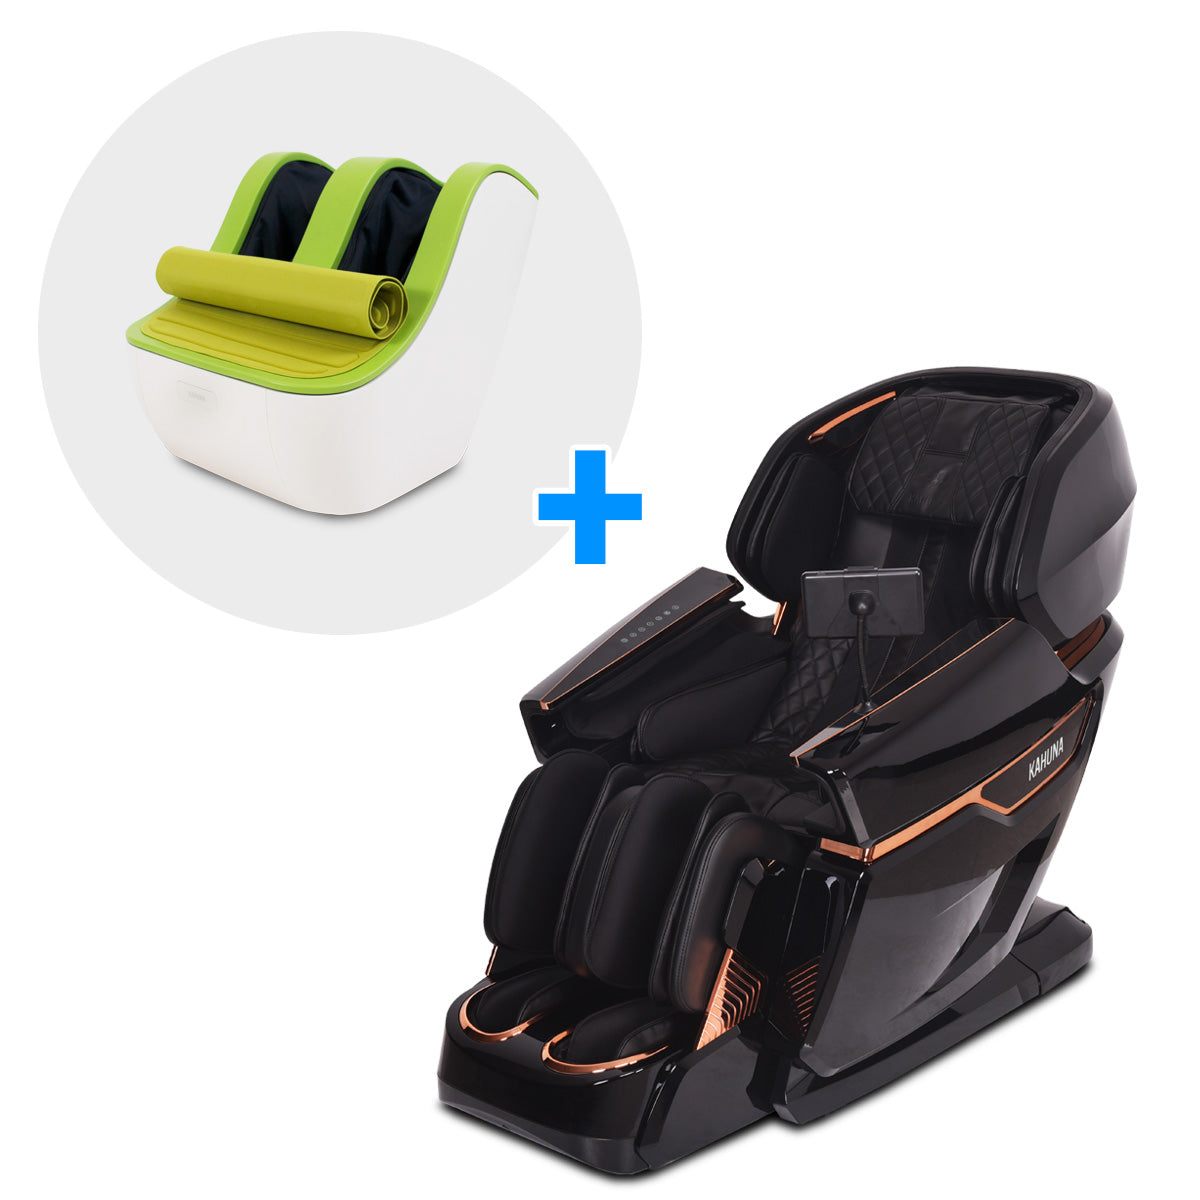 Kahuna Massage Chair EM-8500